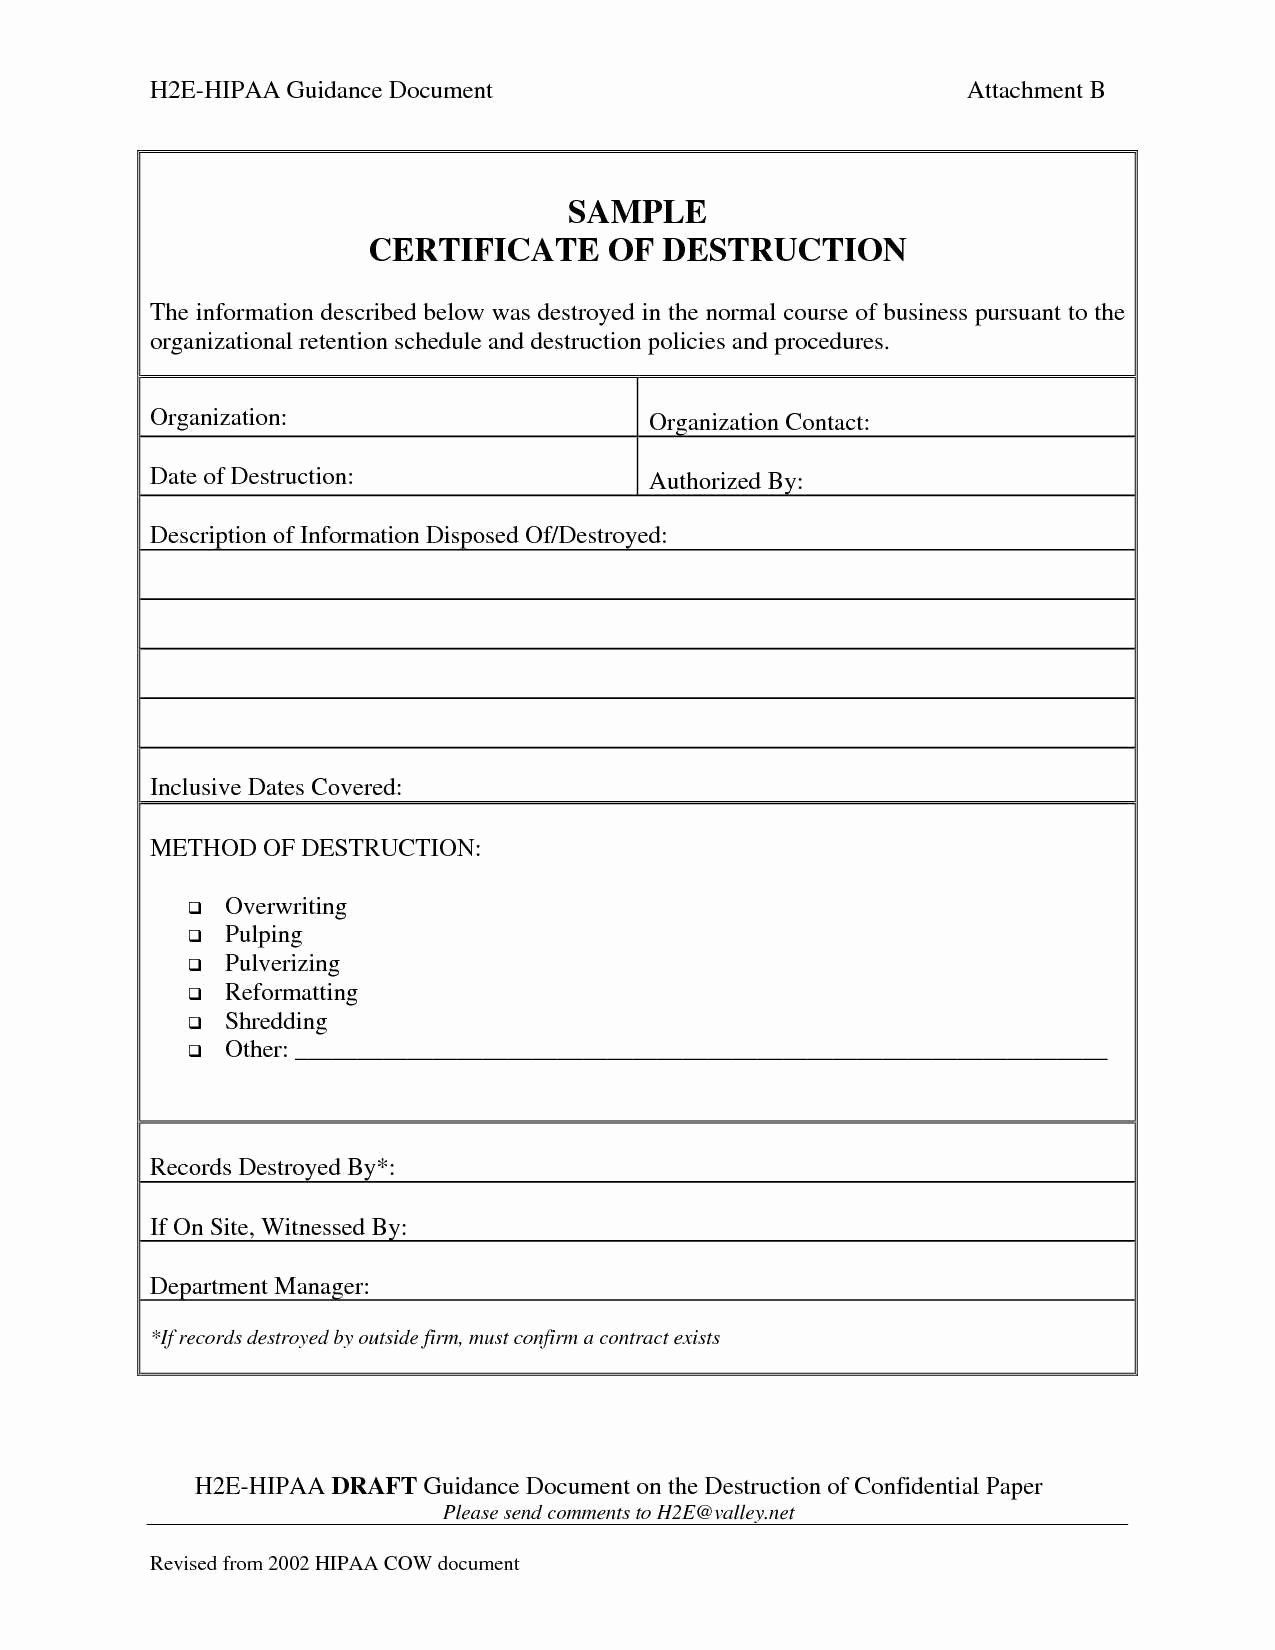 Certificate Of Destruction Template Best Of Certificate Destruction Template Word Reeviewer